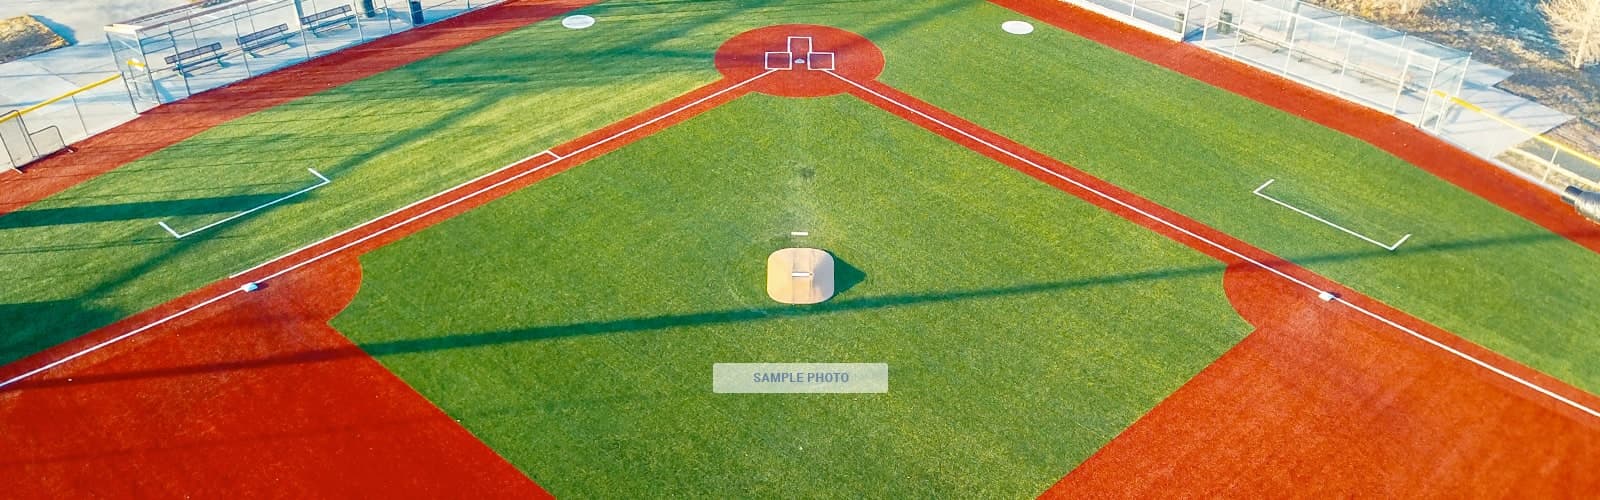 Deerfield Park Elementary School Field - Baseball in Deerfield Beach Florida